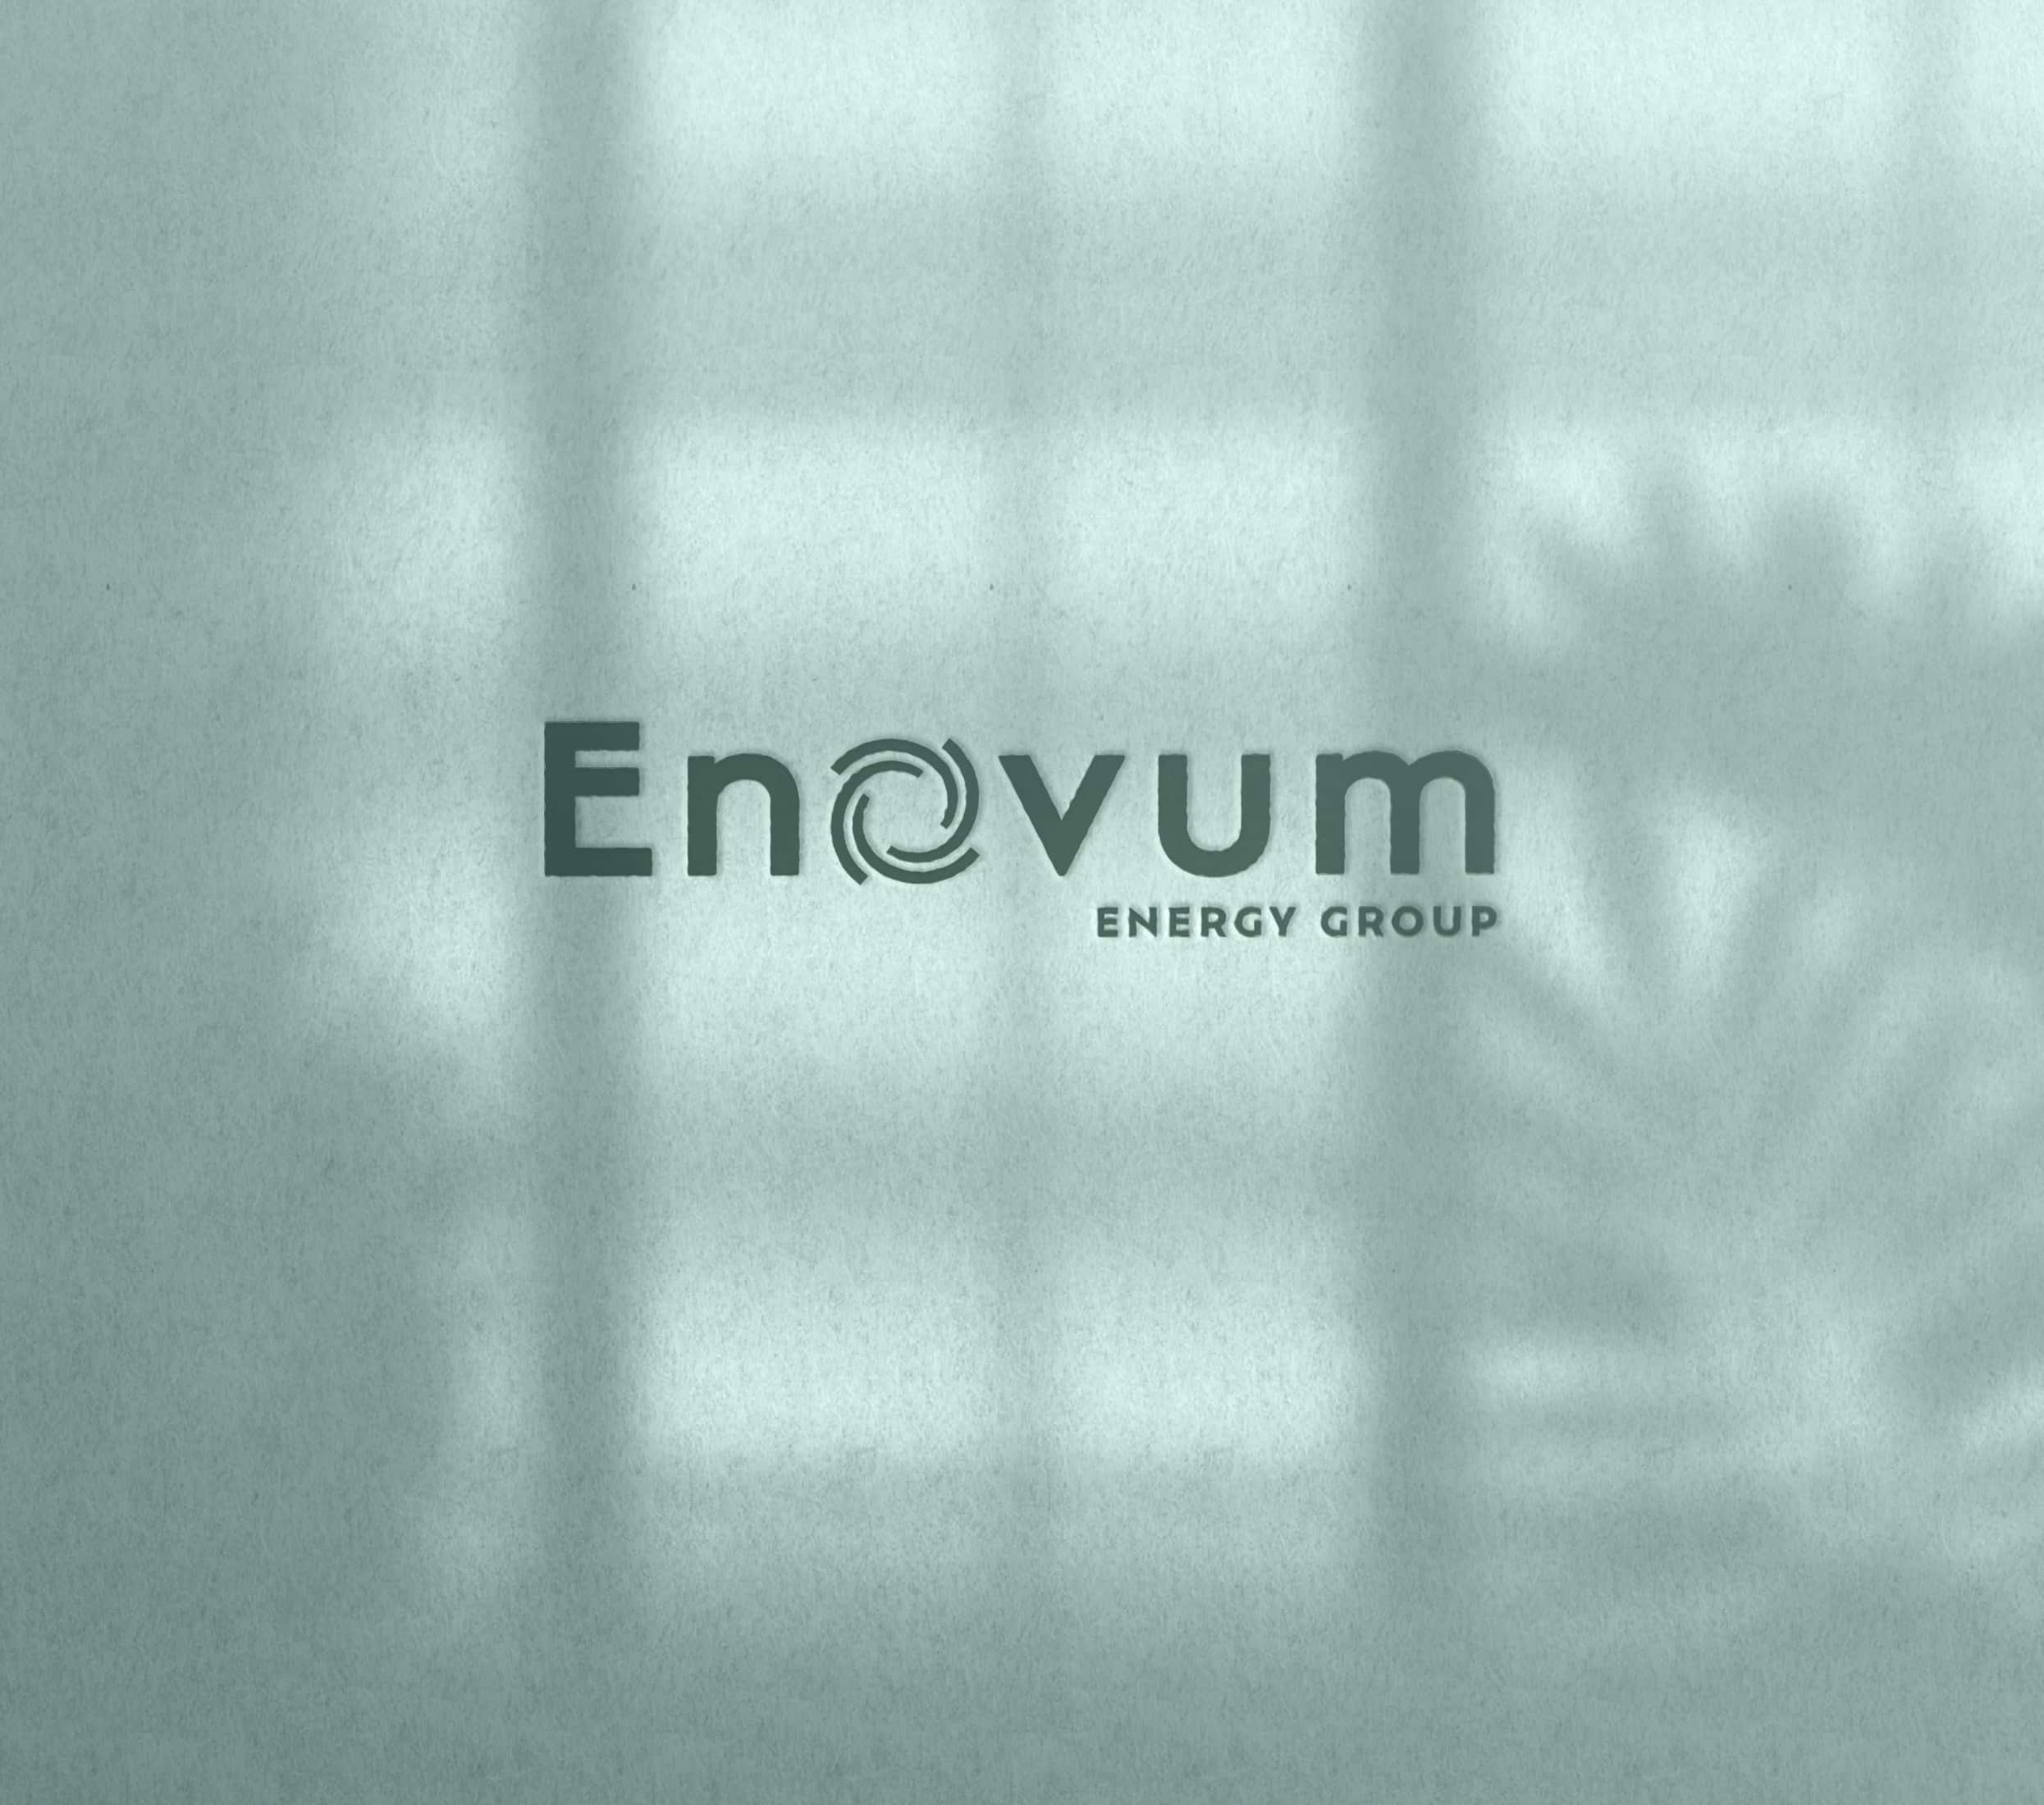 Projekt Corporate Design & Branding für Enovum Energy Group